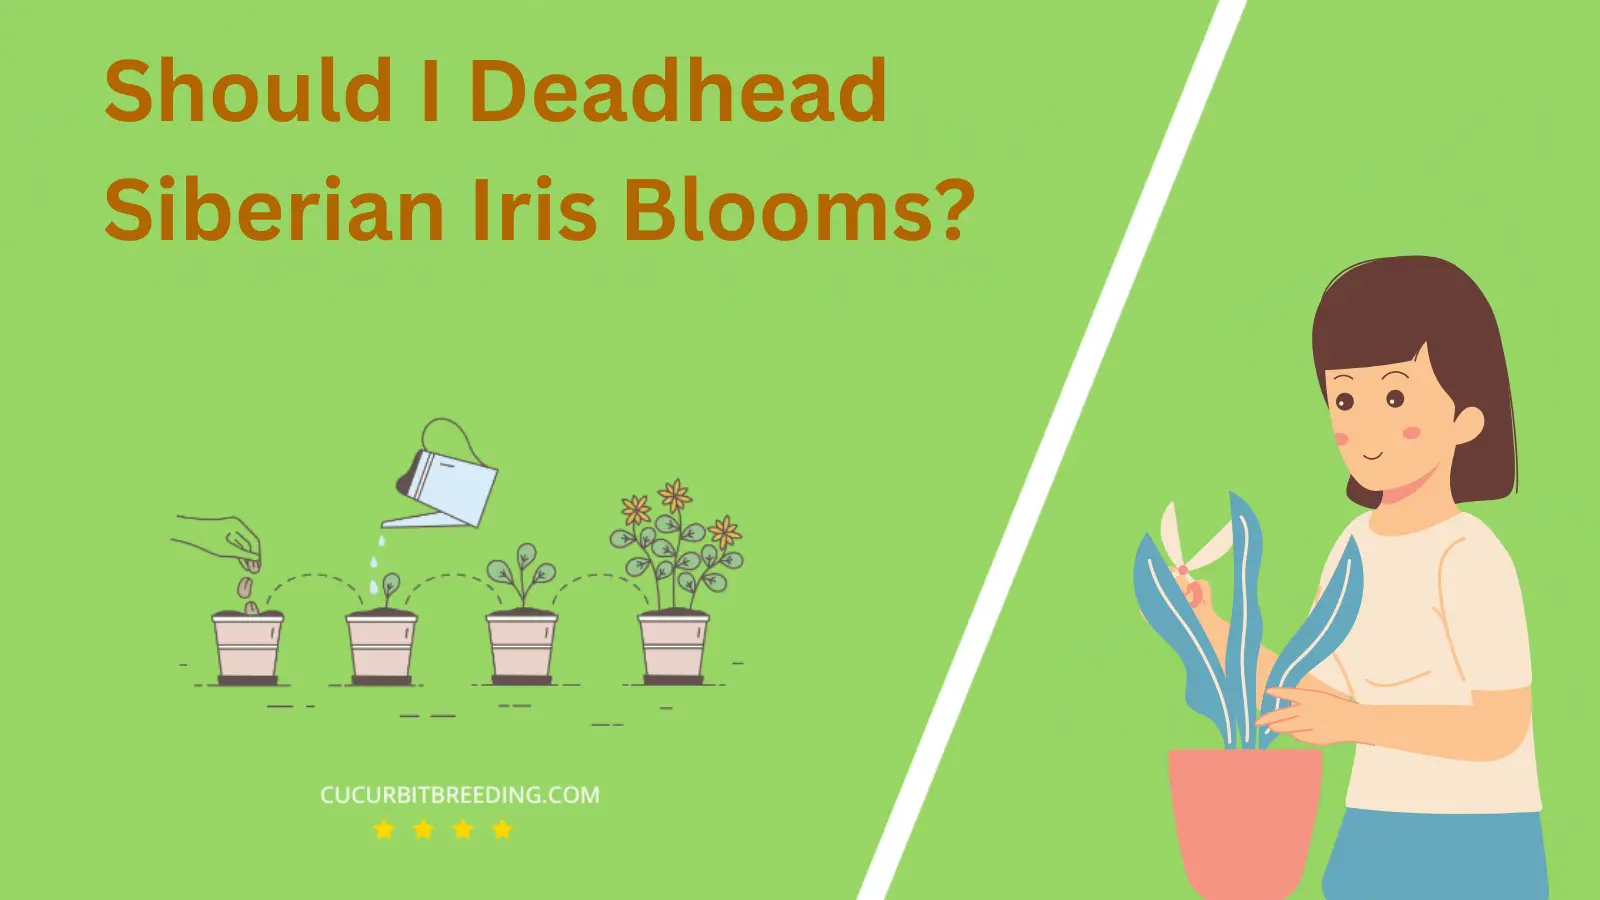 Should I Deadhead Siberian Iris Blooms?